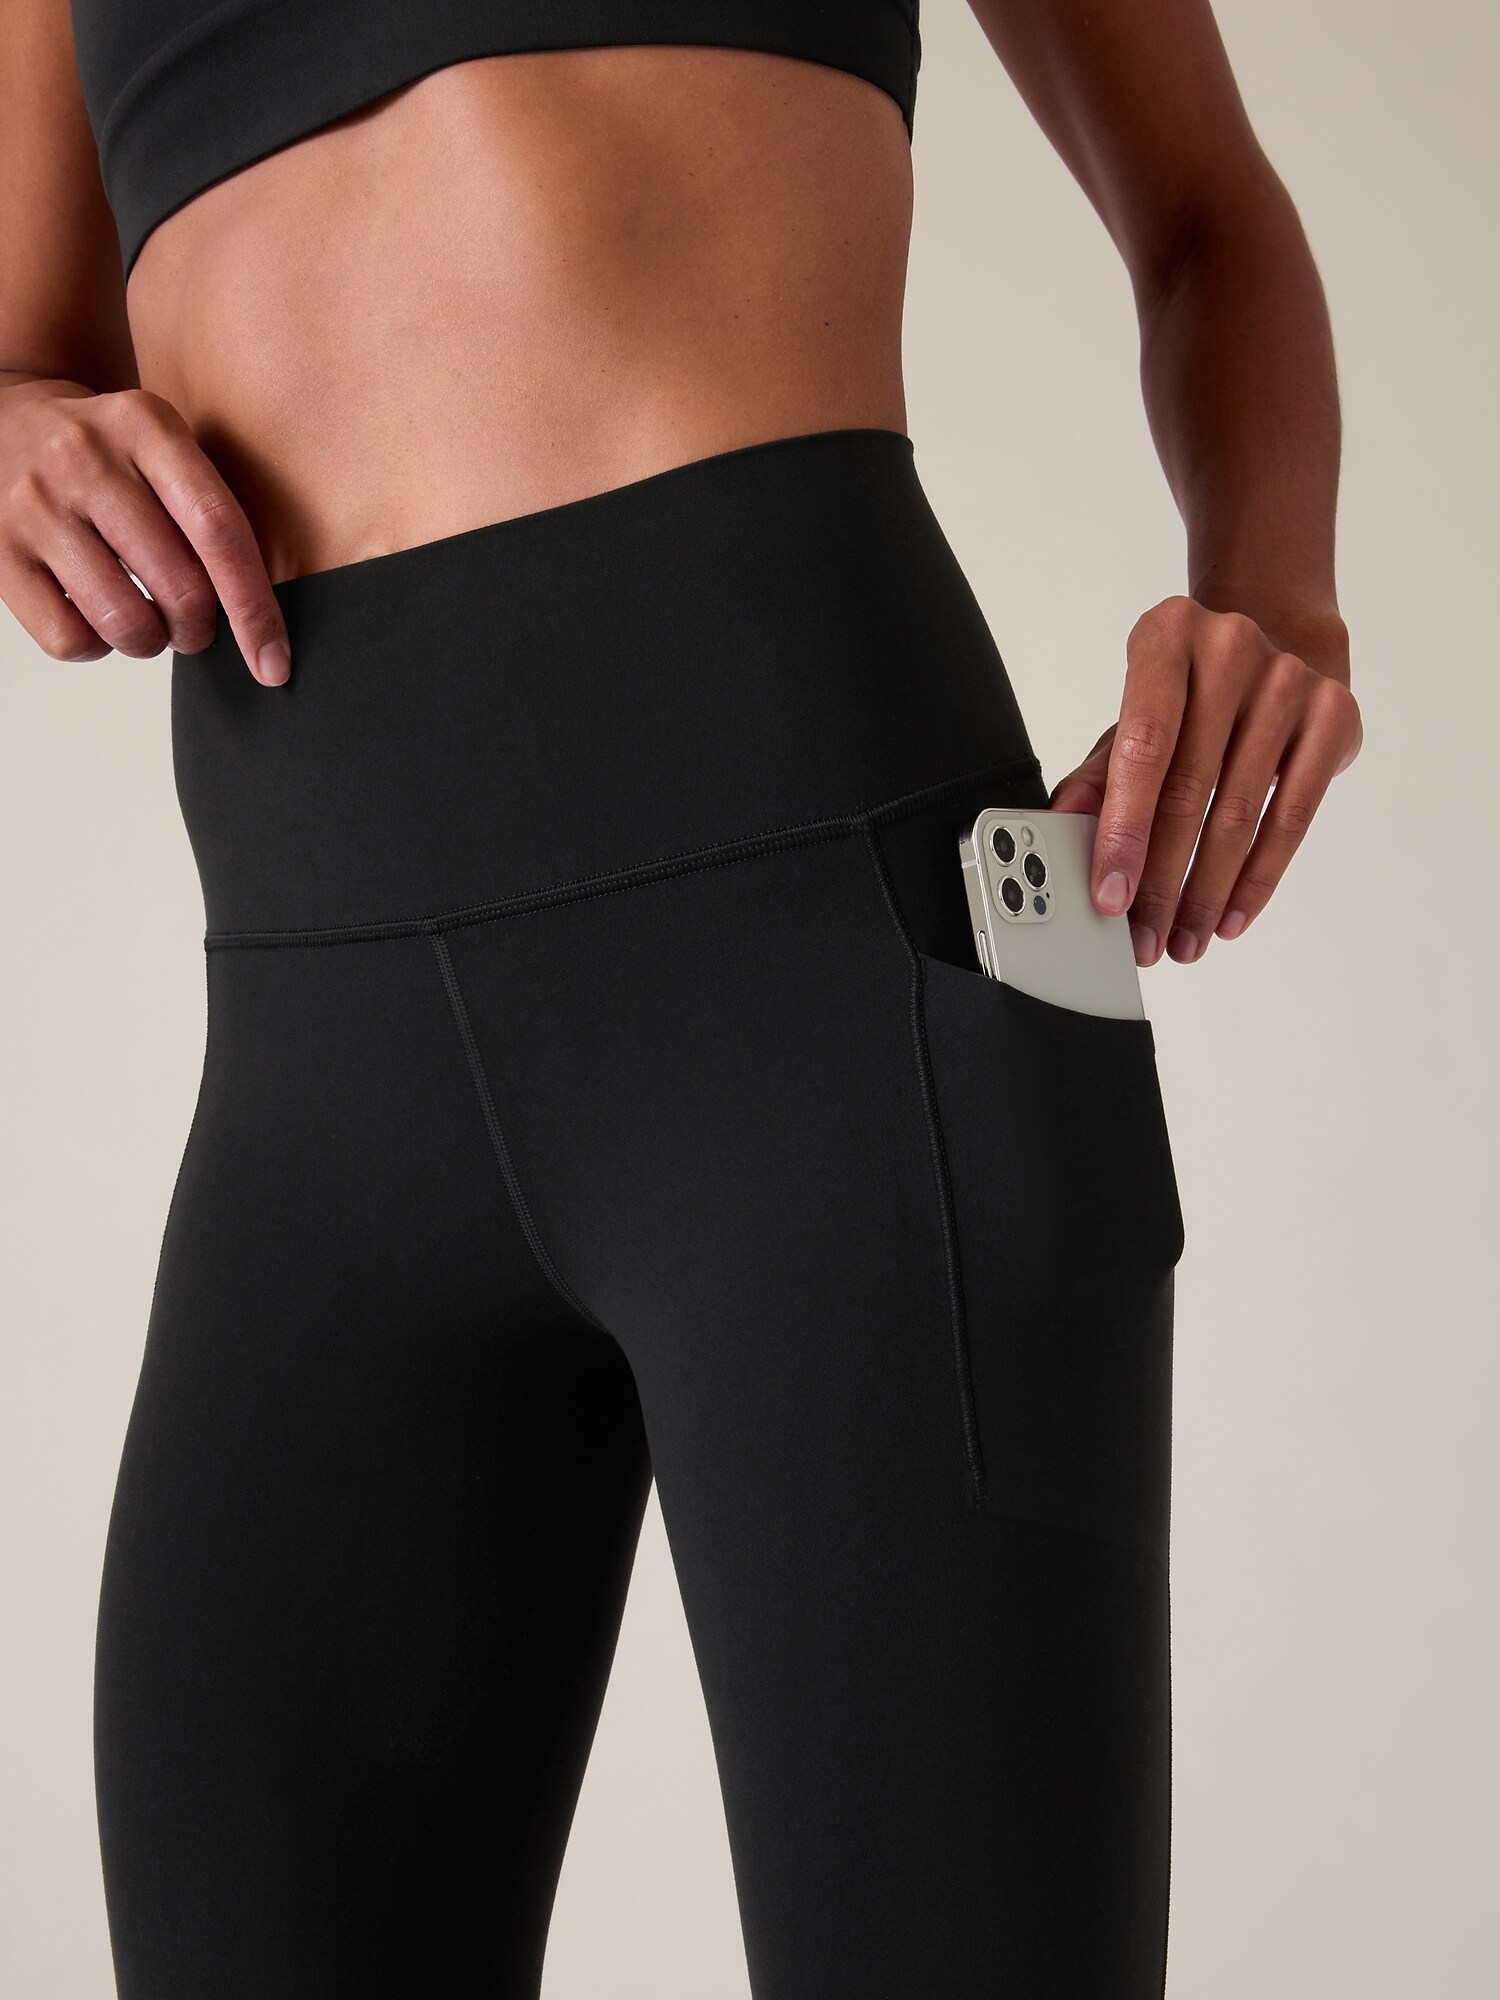 Athleta Capri Leggings Womens Medium Yoga Pants Back Stash Pocket Zipper